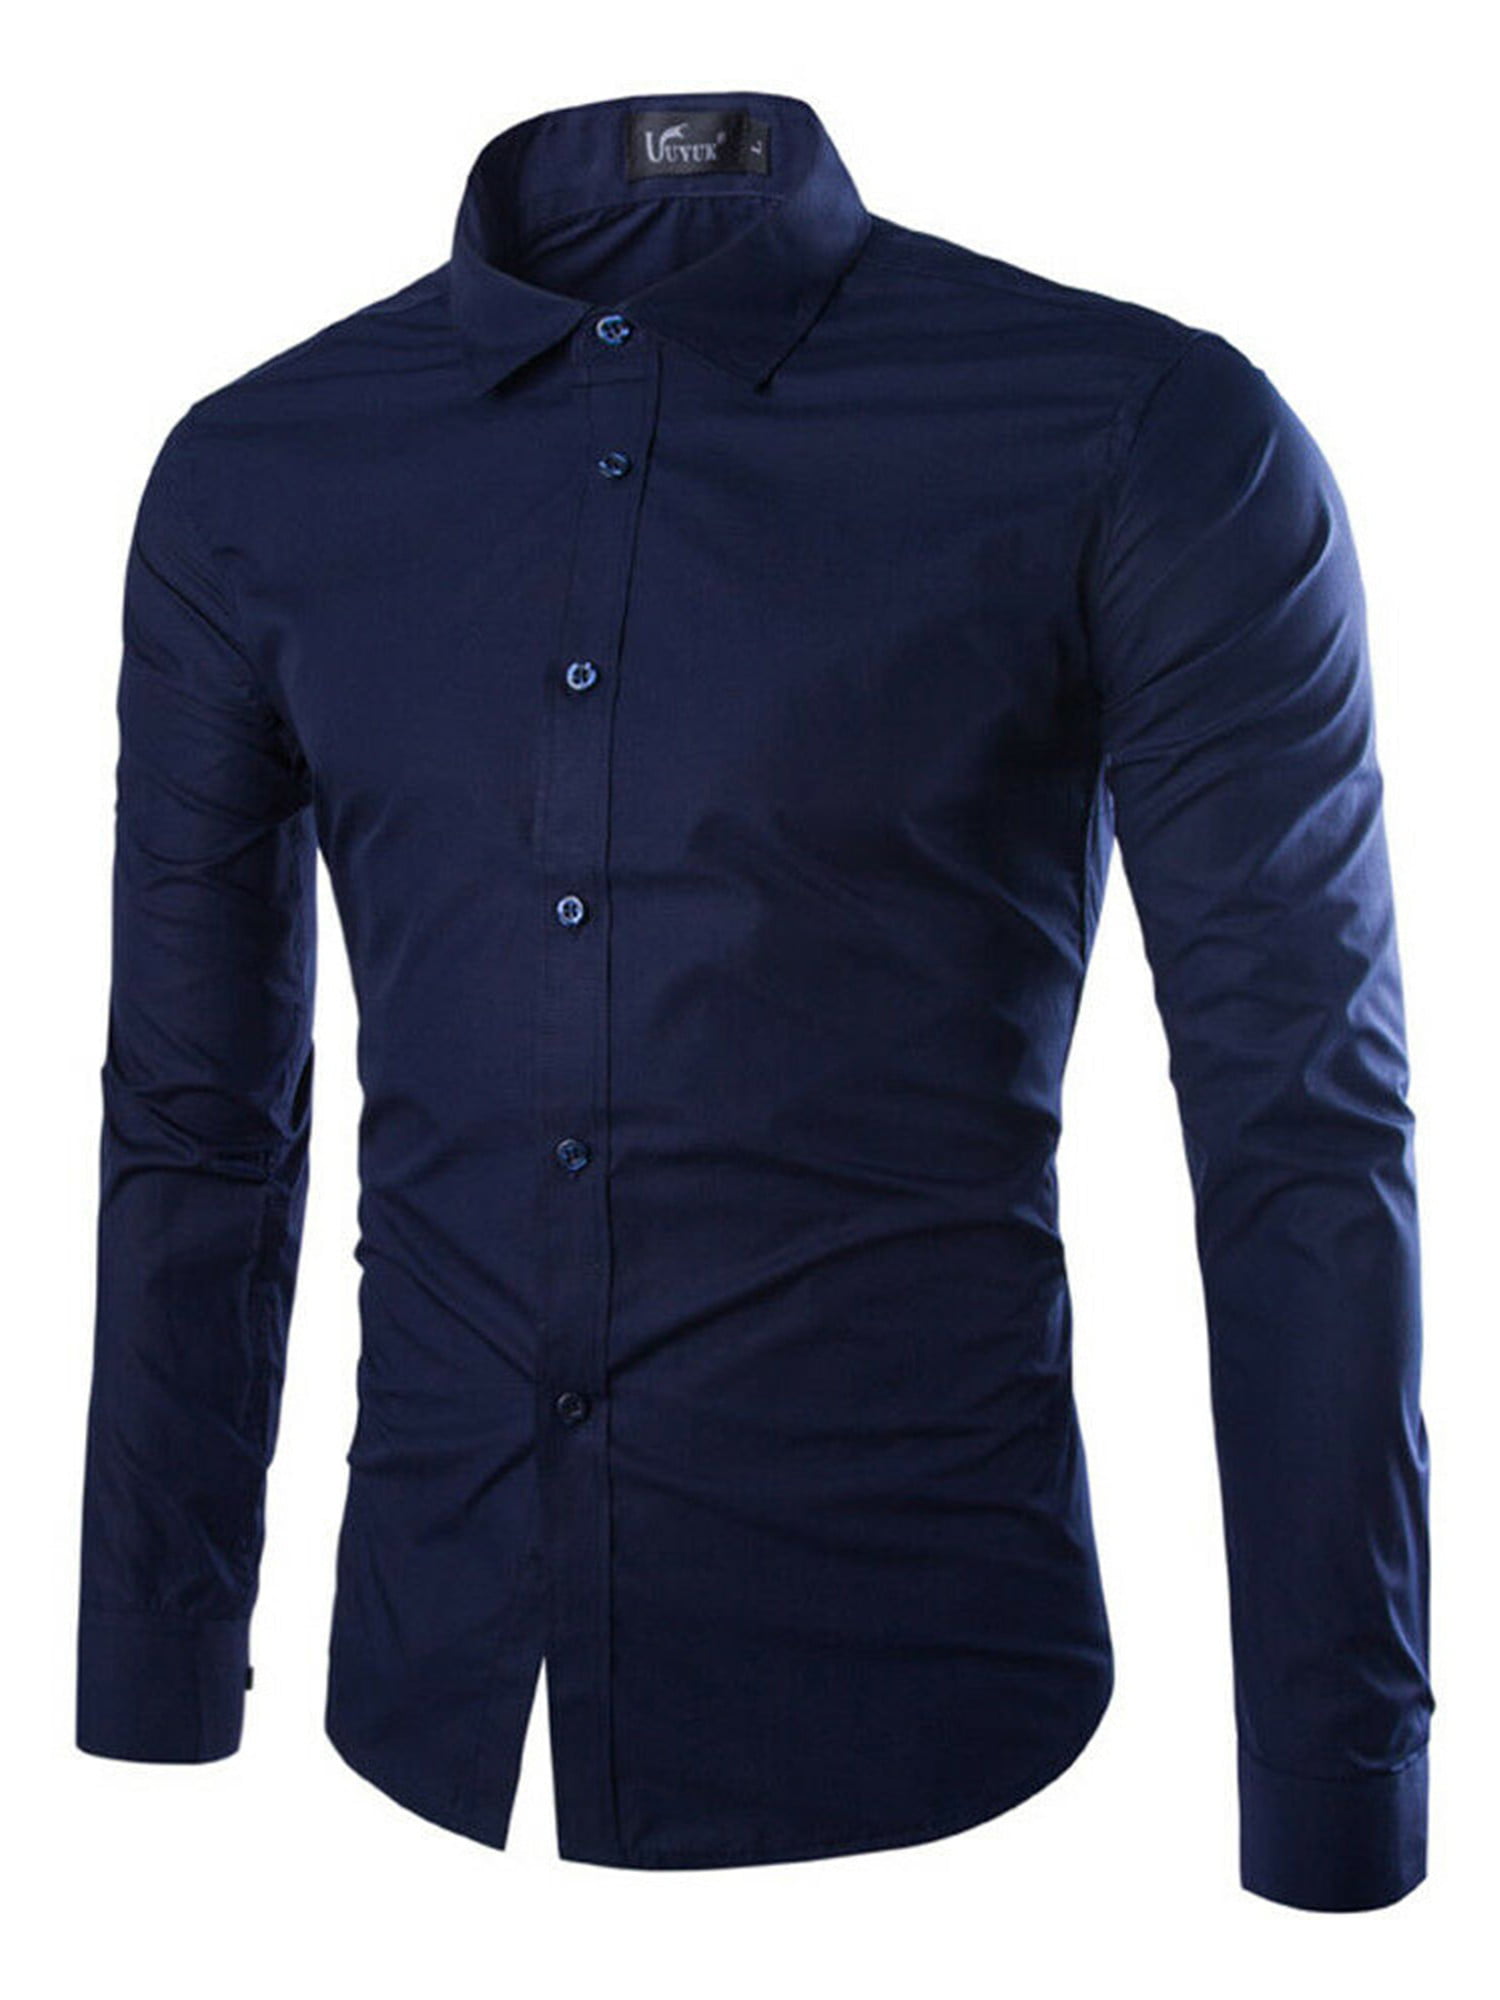 Wsevypo - Wsevypo Men's Long Sleeve Dress Shirt Solid Slim Fit Casual ...